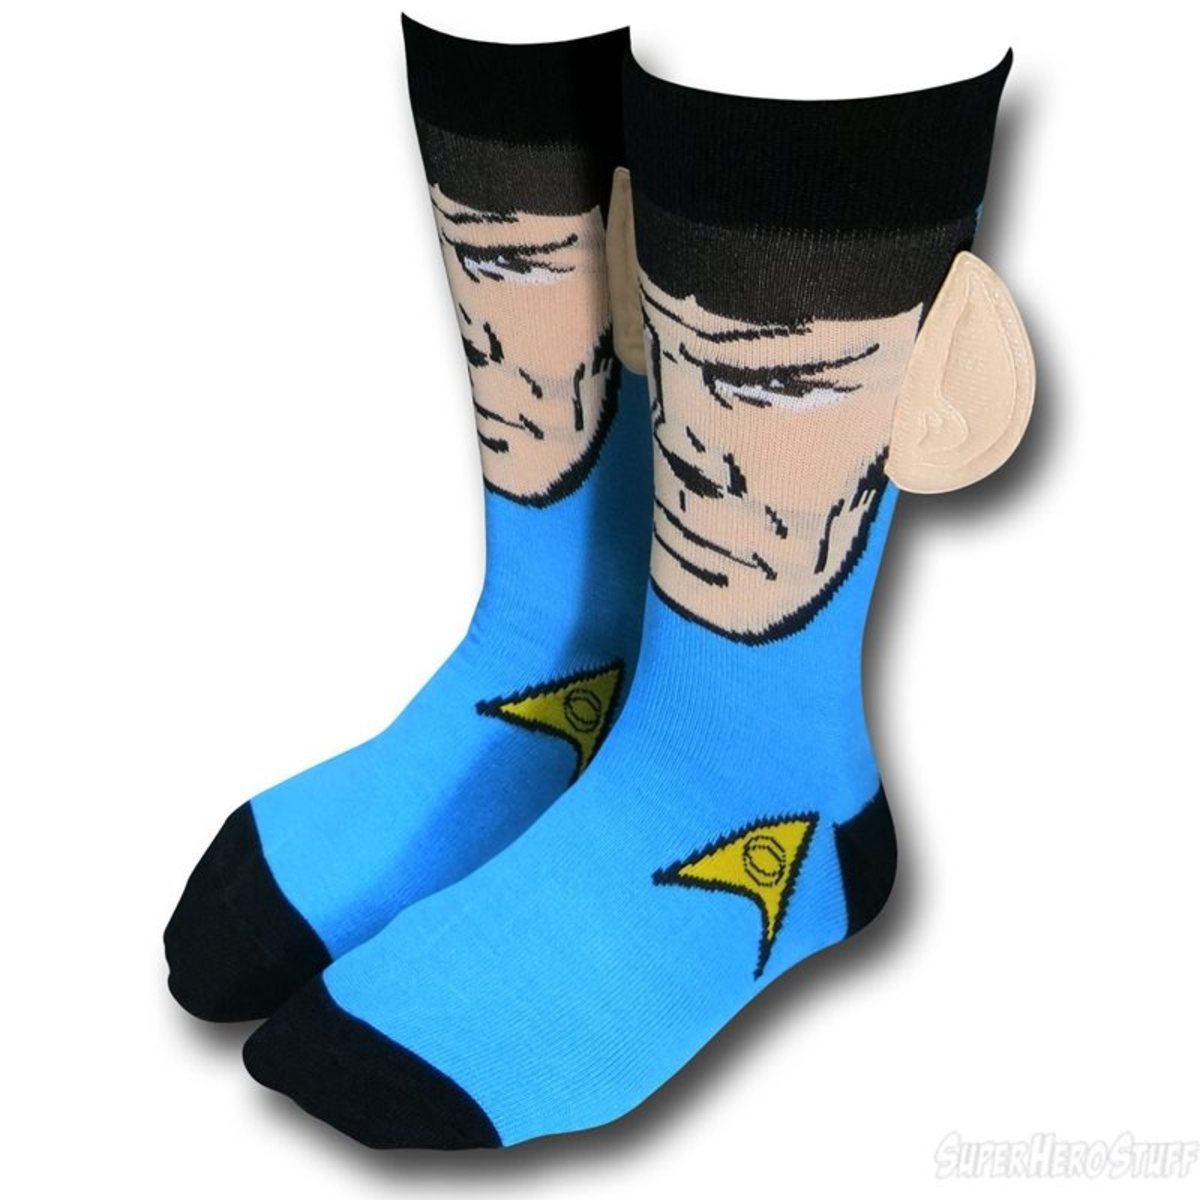 The Best Star Trek Gift Ideas for Trekkies! - HubPages